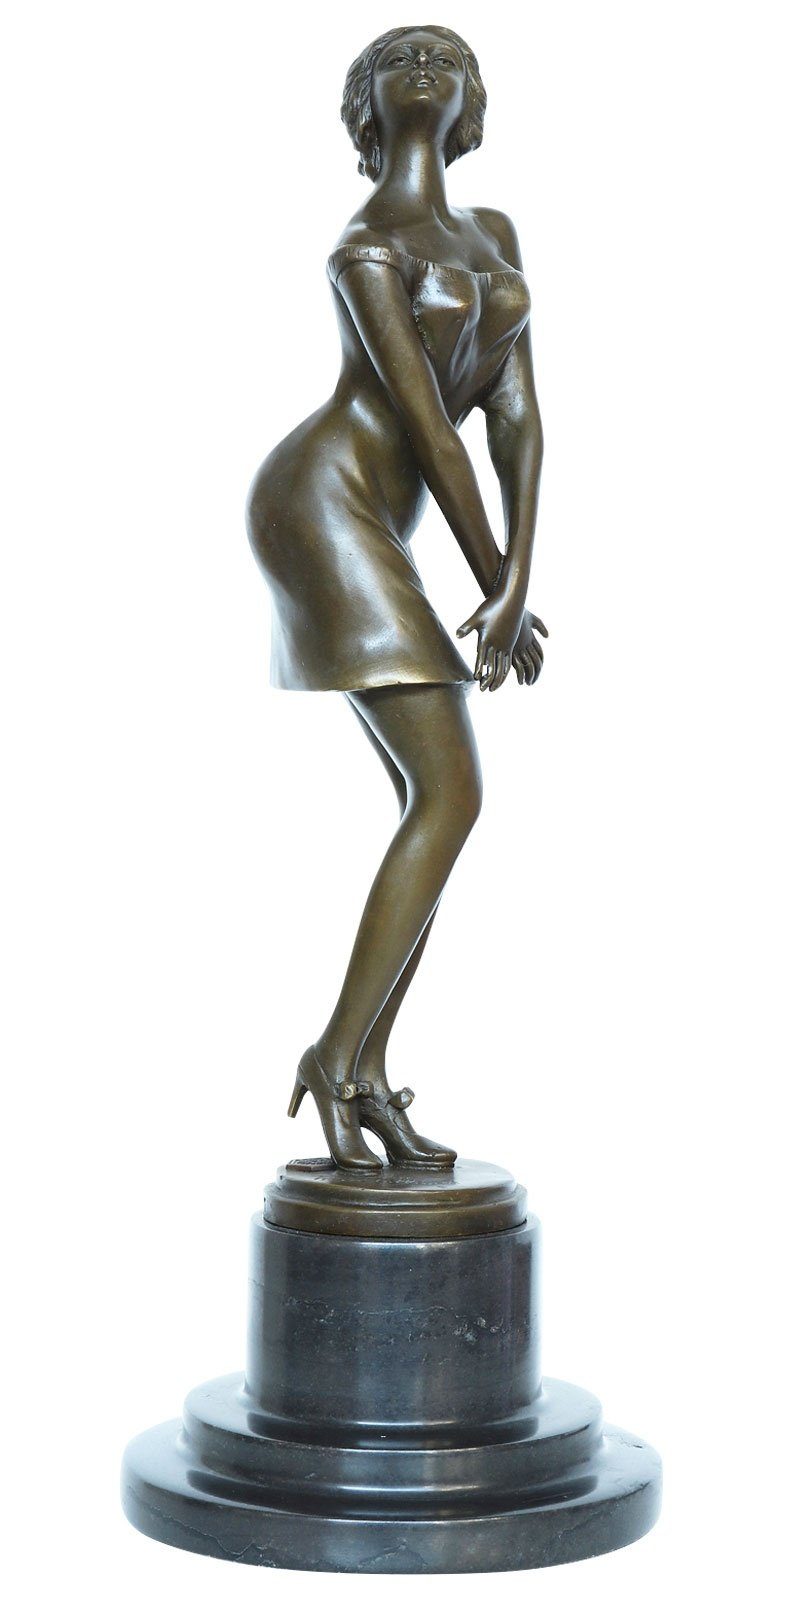 Aubaho Skulptur Bronzeskulptur Erotik erotische Kunst im Antik-Stil Bronze Figur 36cm | Skulpturen